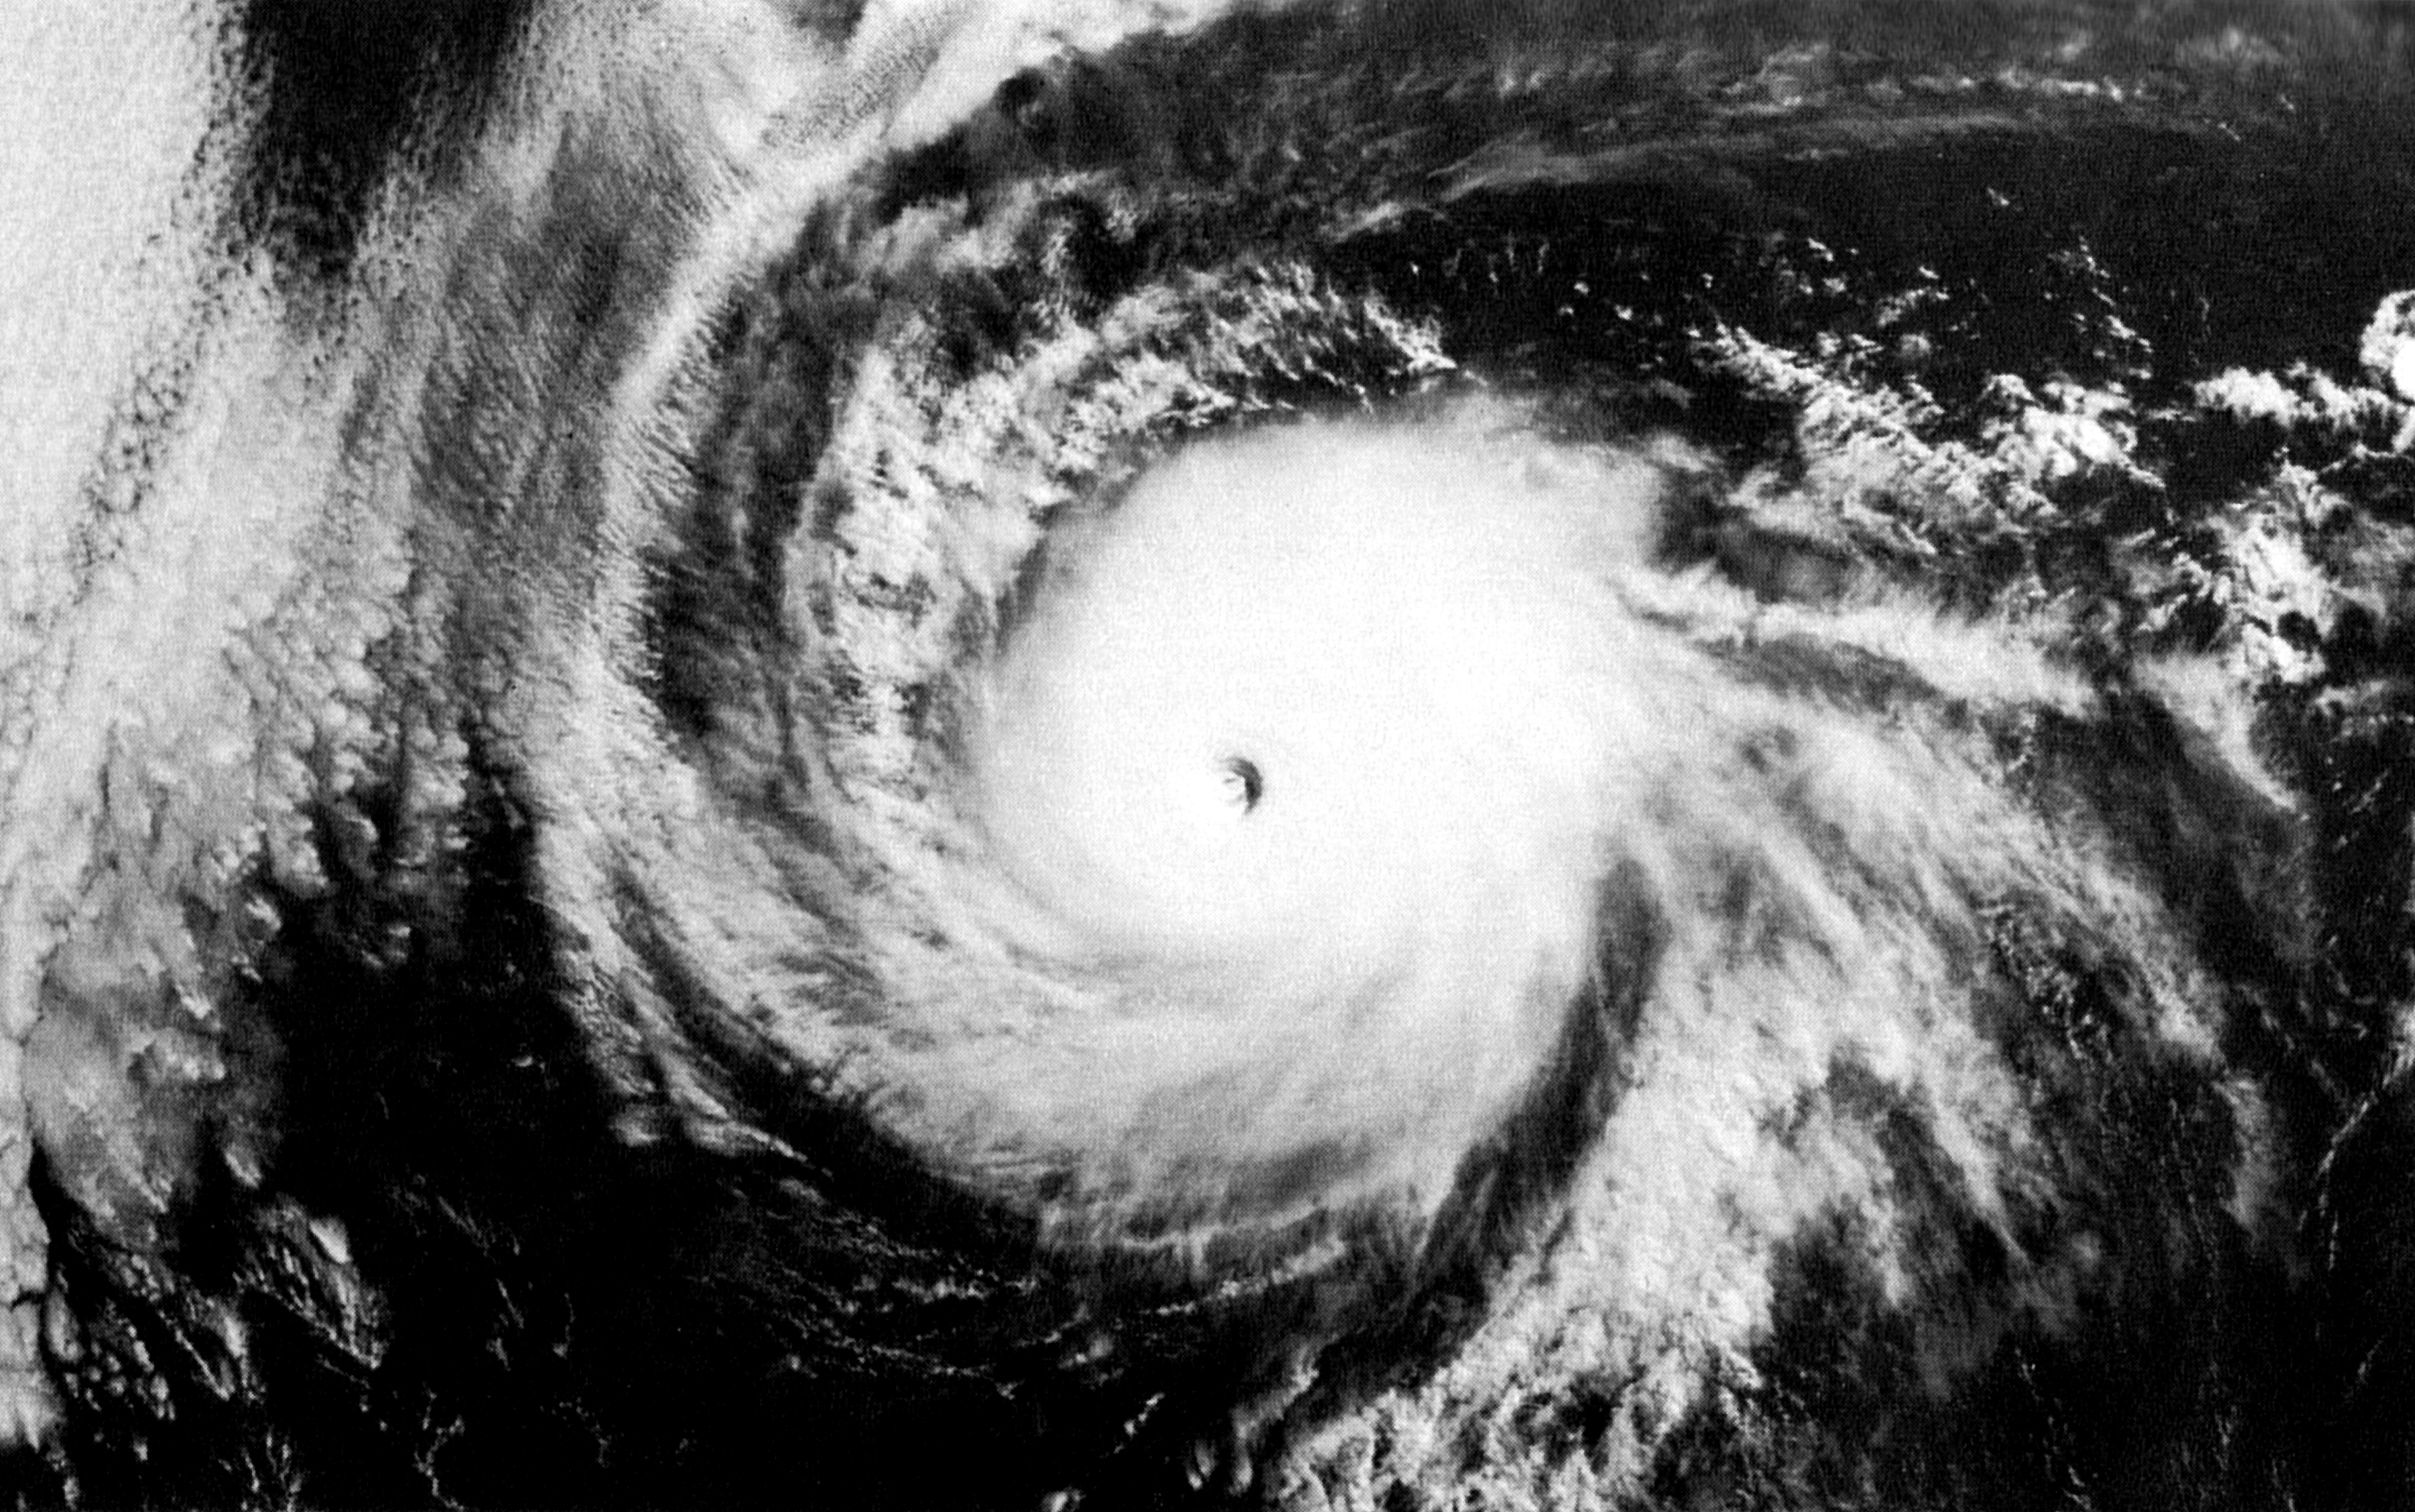 Hurricane PNG Image